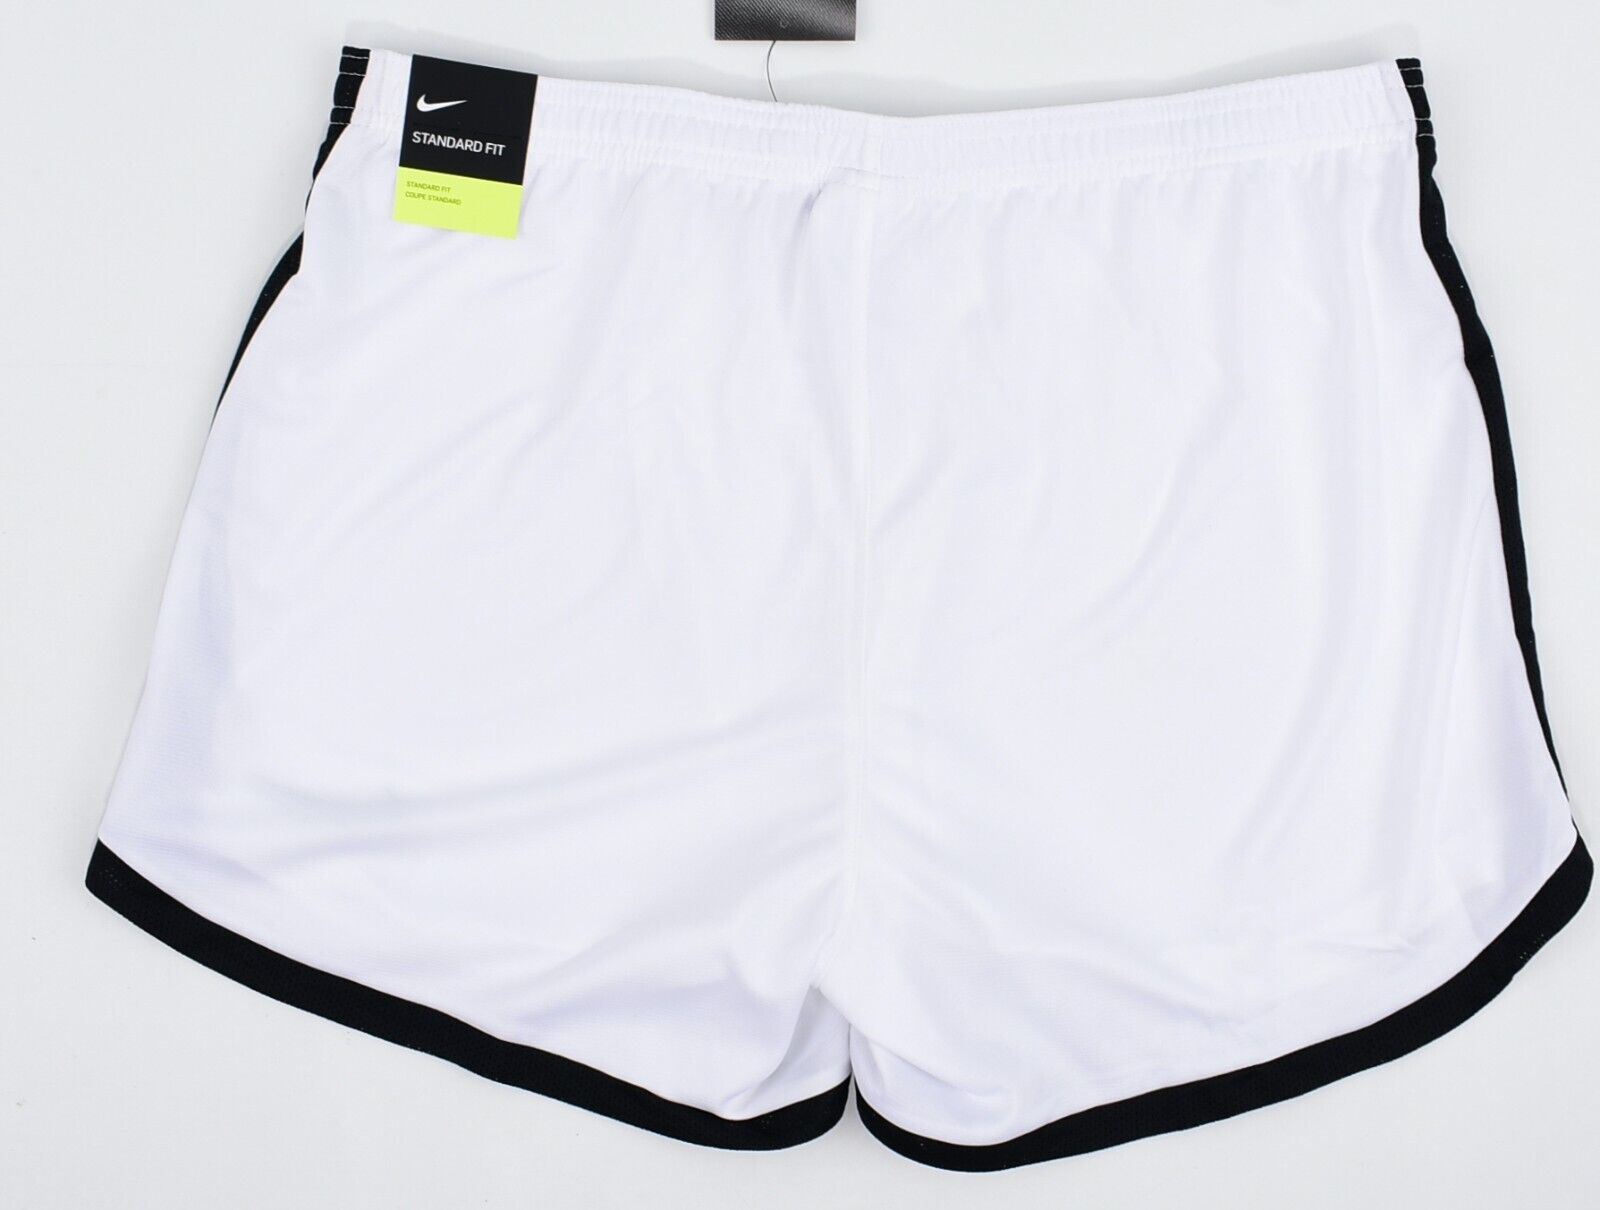 NIKE Women's DriFit Academy Football /Training Shorts, White/Black, size XL